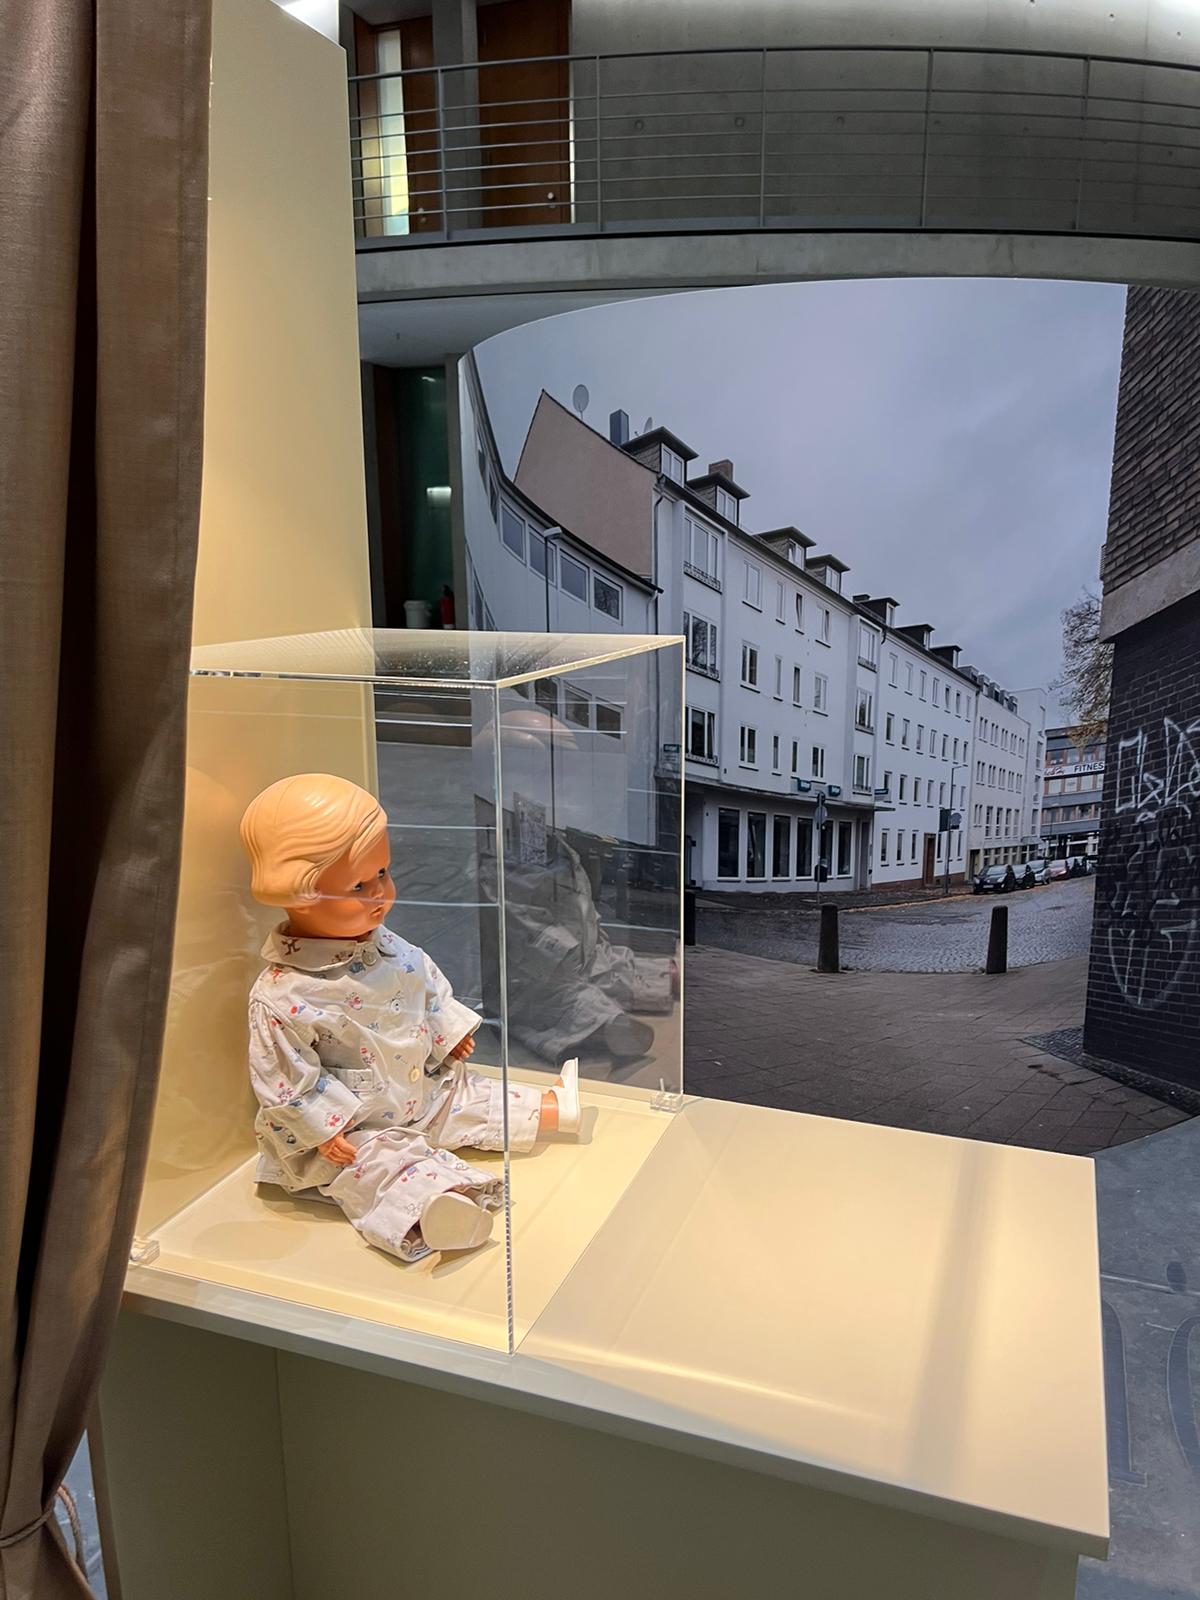 Lore Mayerfeld Stern's doll Inge against the backdrop of modern-day Kassel, where Lore grew up